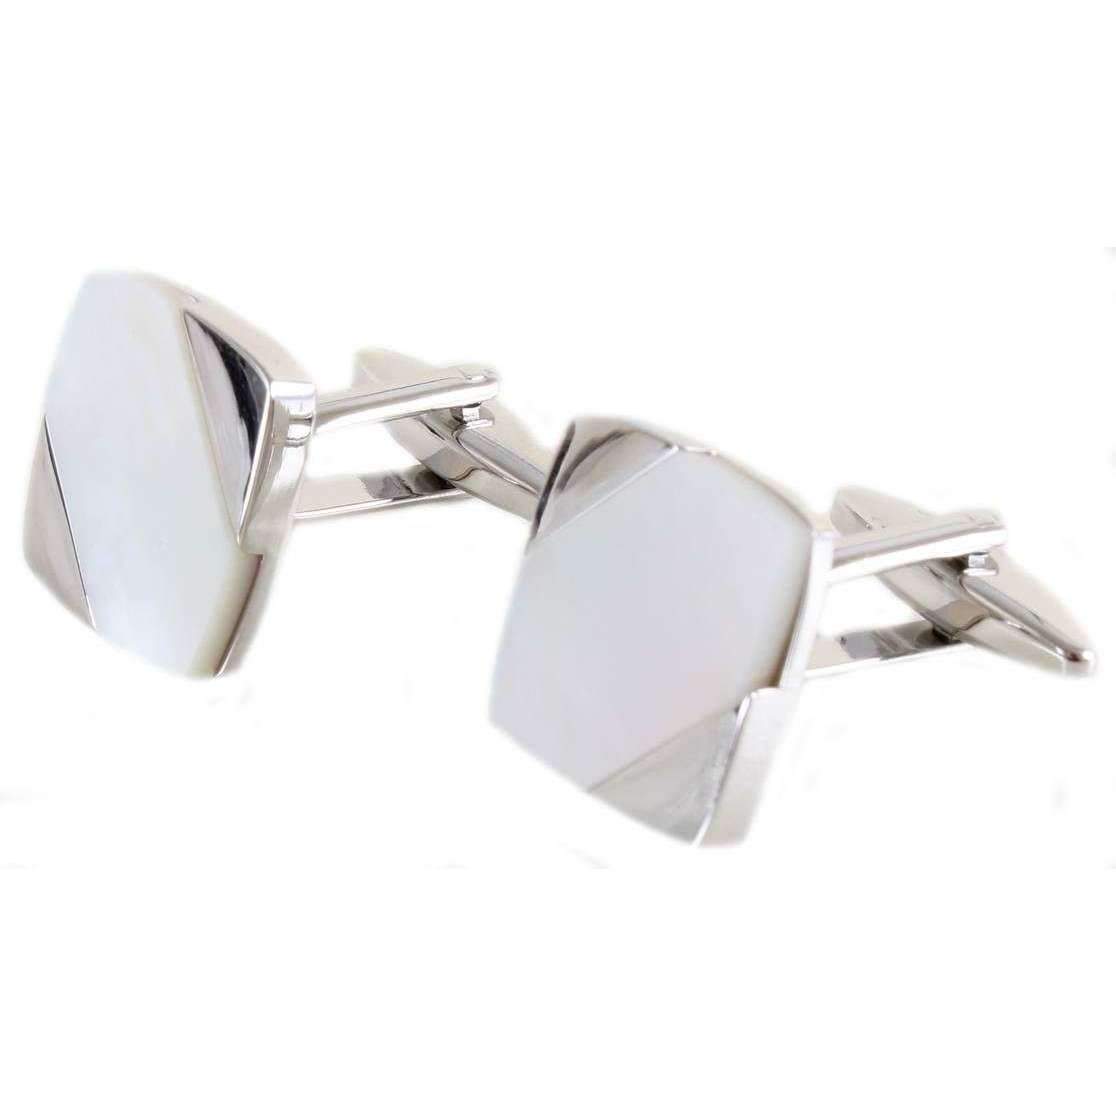 Rhodium Plated MoP Diagonal Cufflinks - HK Jewels